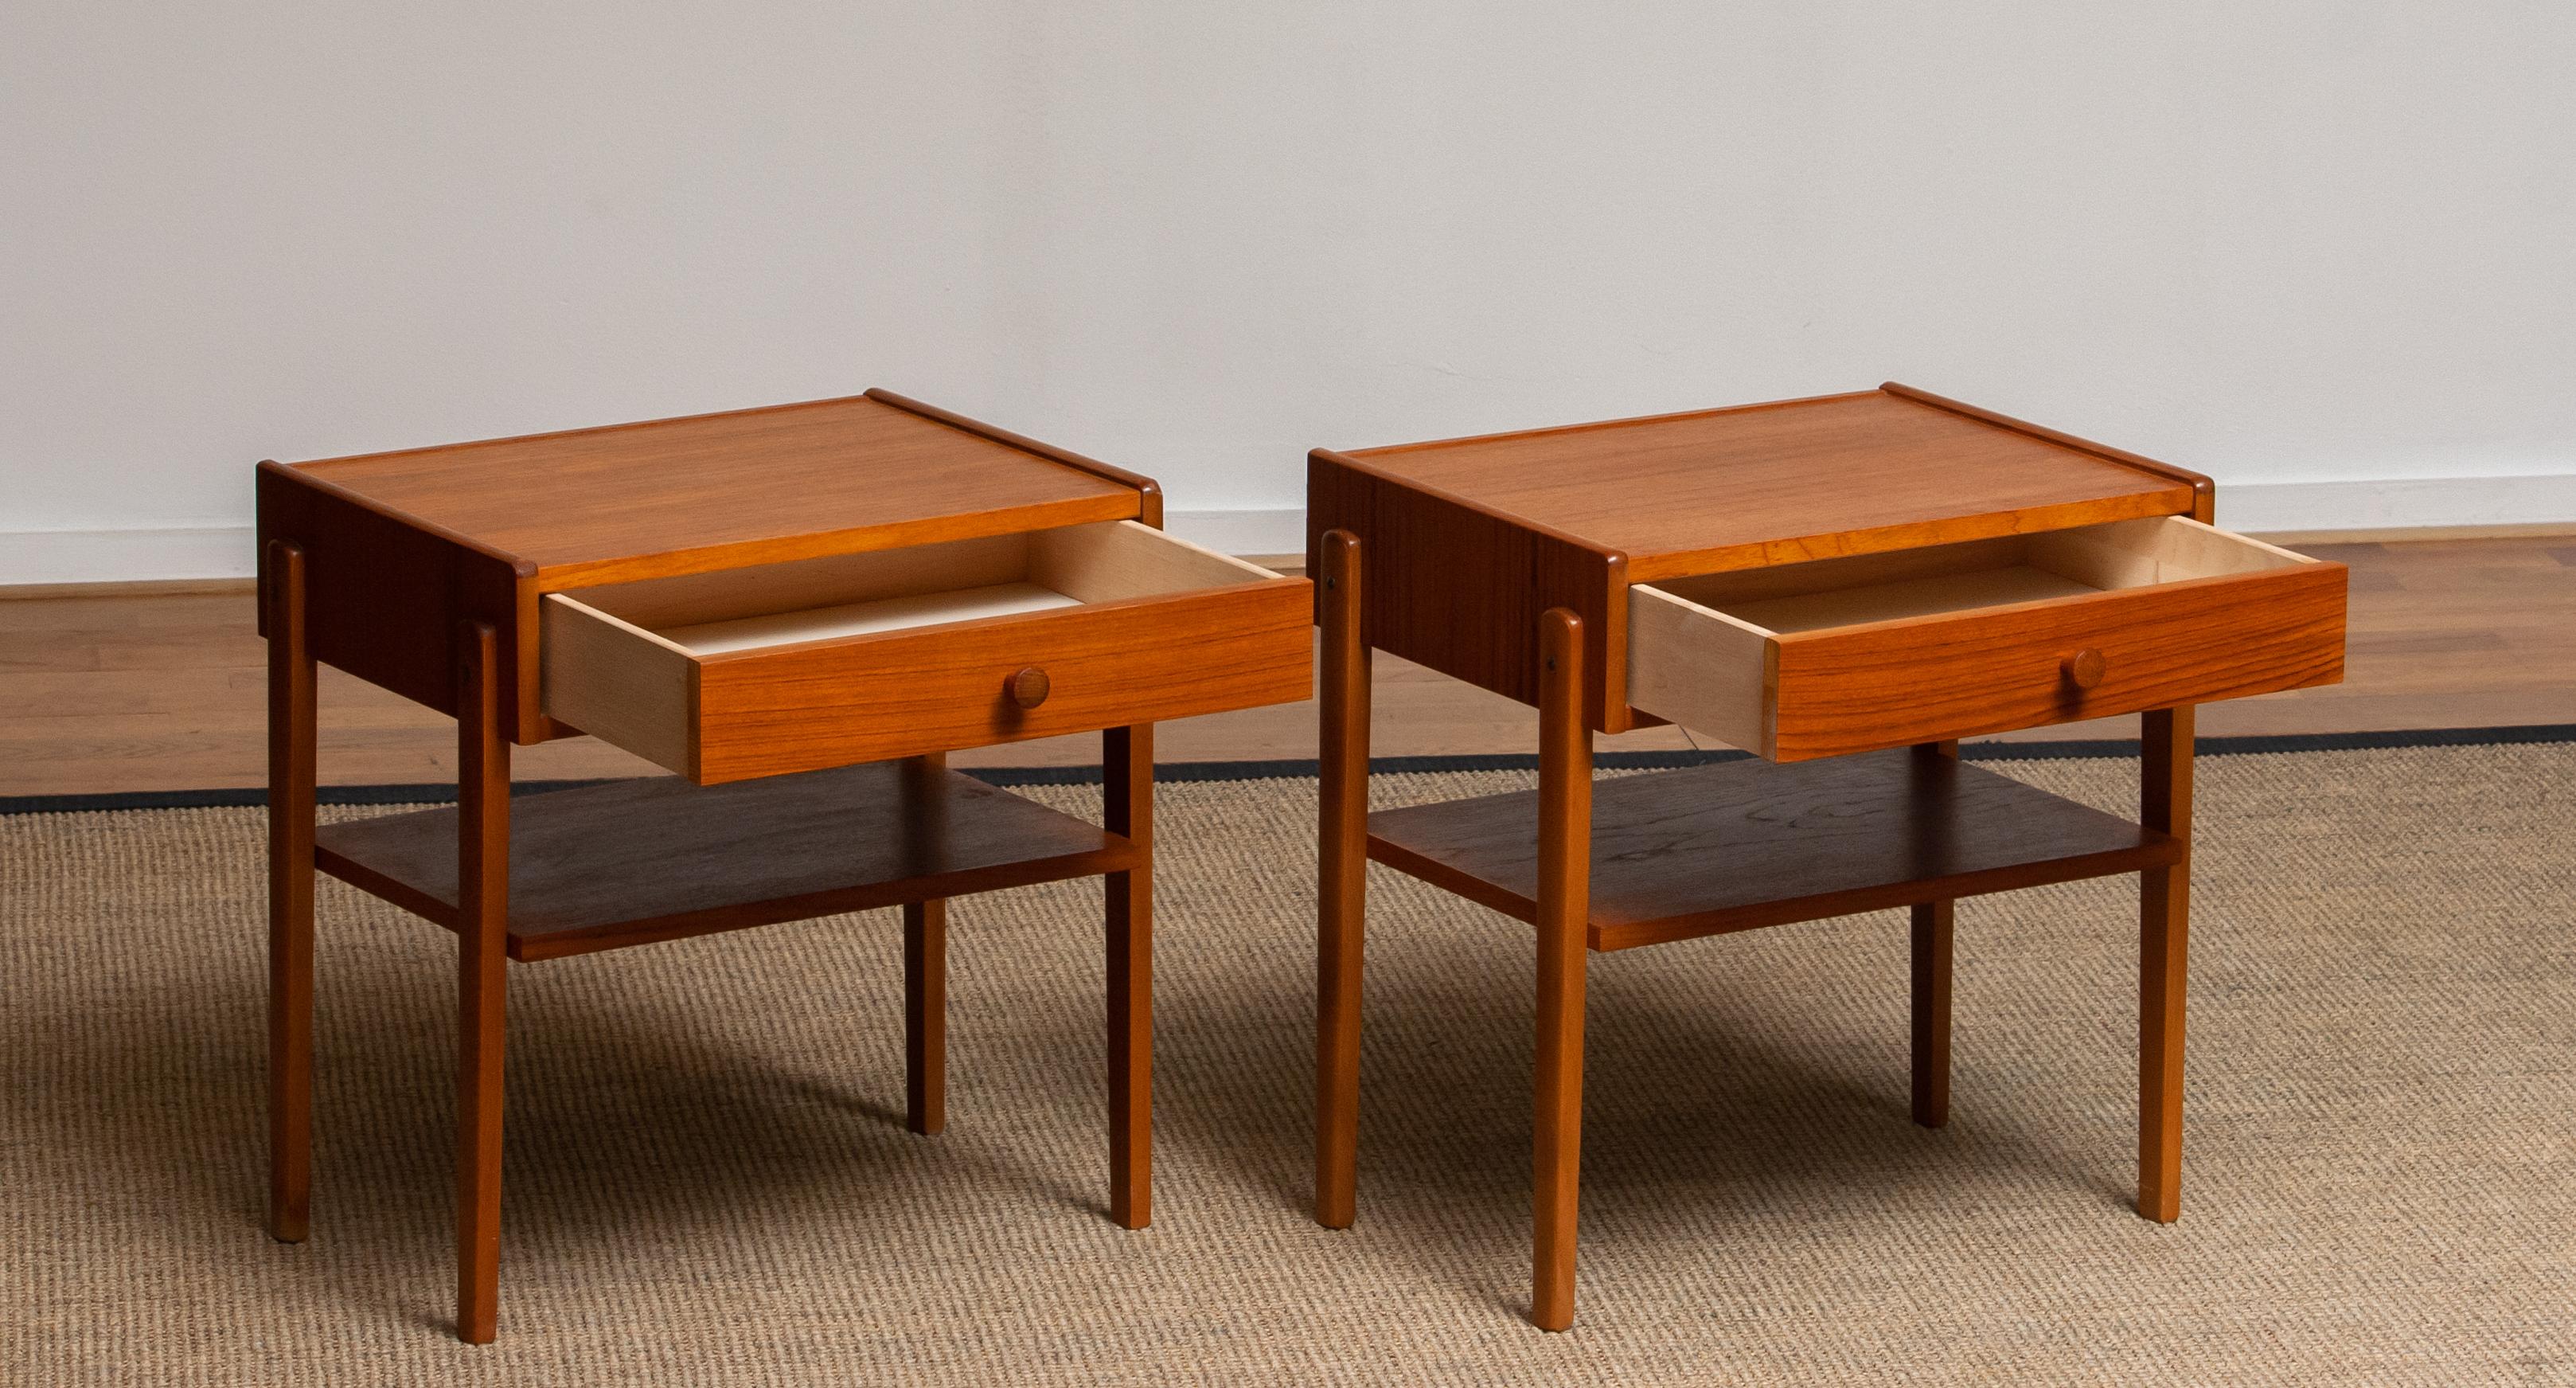 1950 Teak Nightstands Bedside Tables by Carlström & Co Mobelfabrik Sweden, 1 In Good Condition For Sale In Silvolde, Gelderland